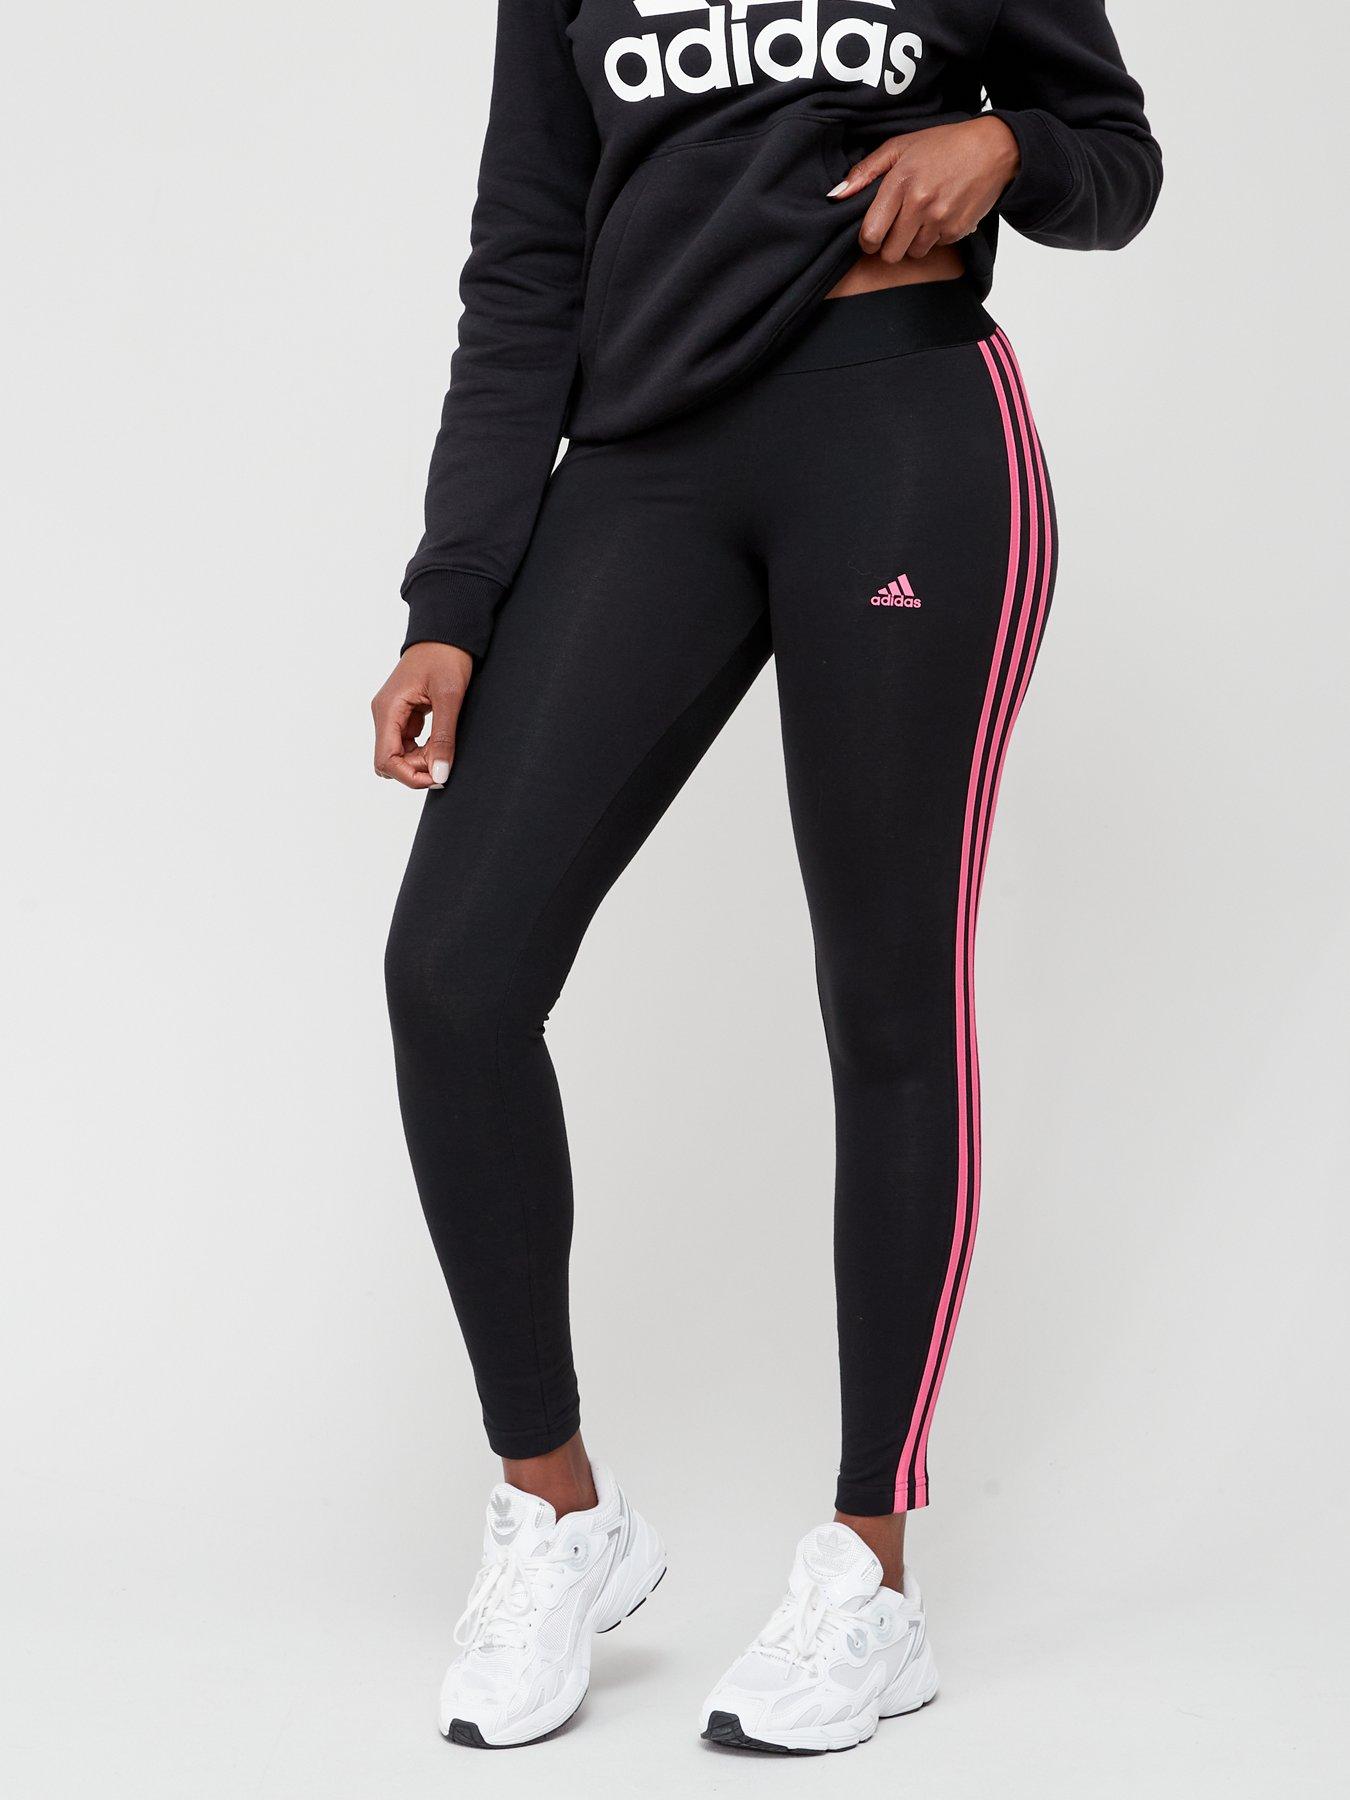 Shop Adidas Women's Mesh Leggings up to 40% Off